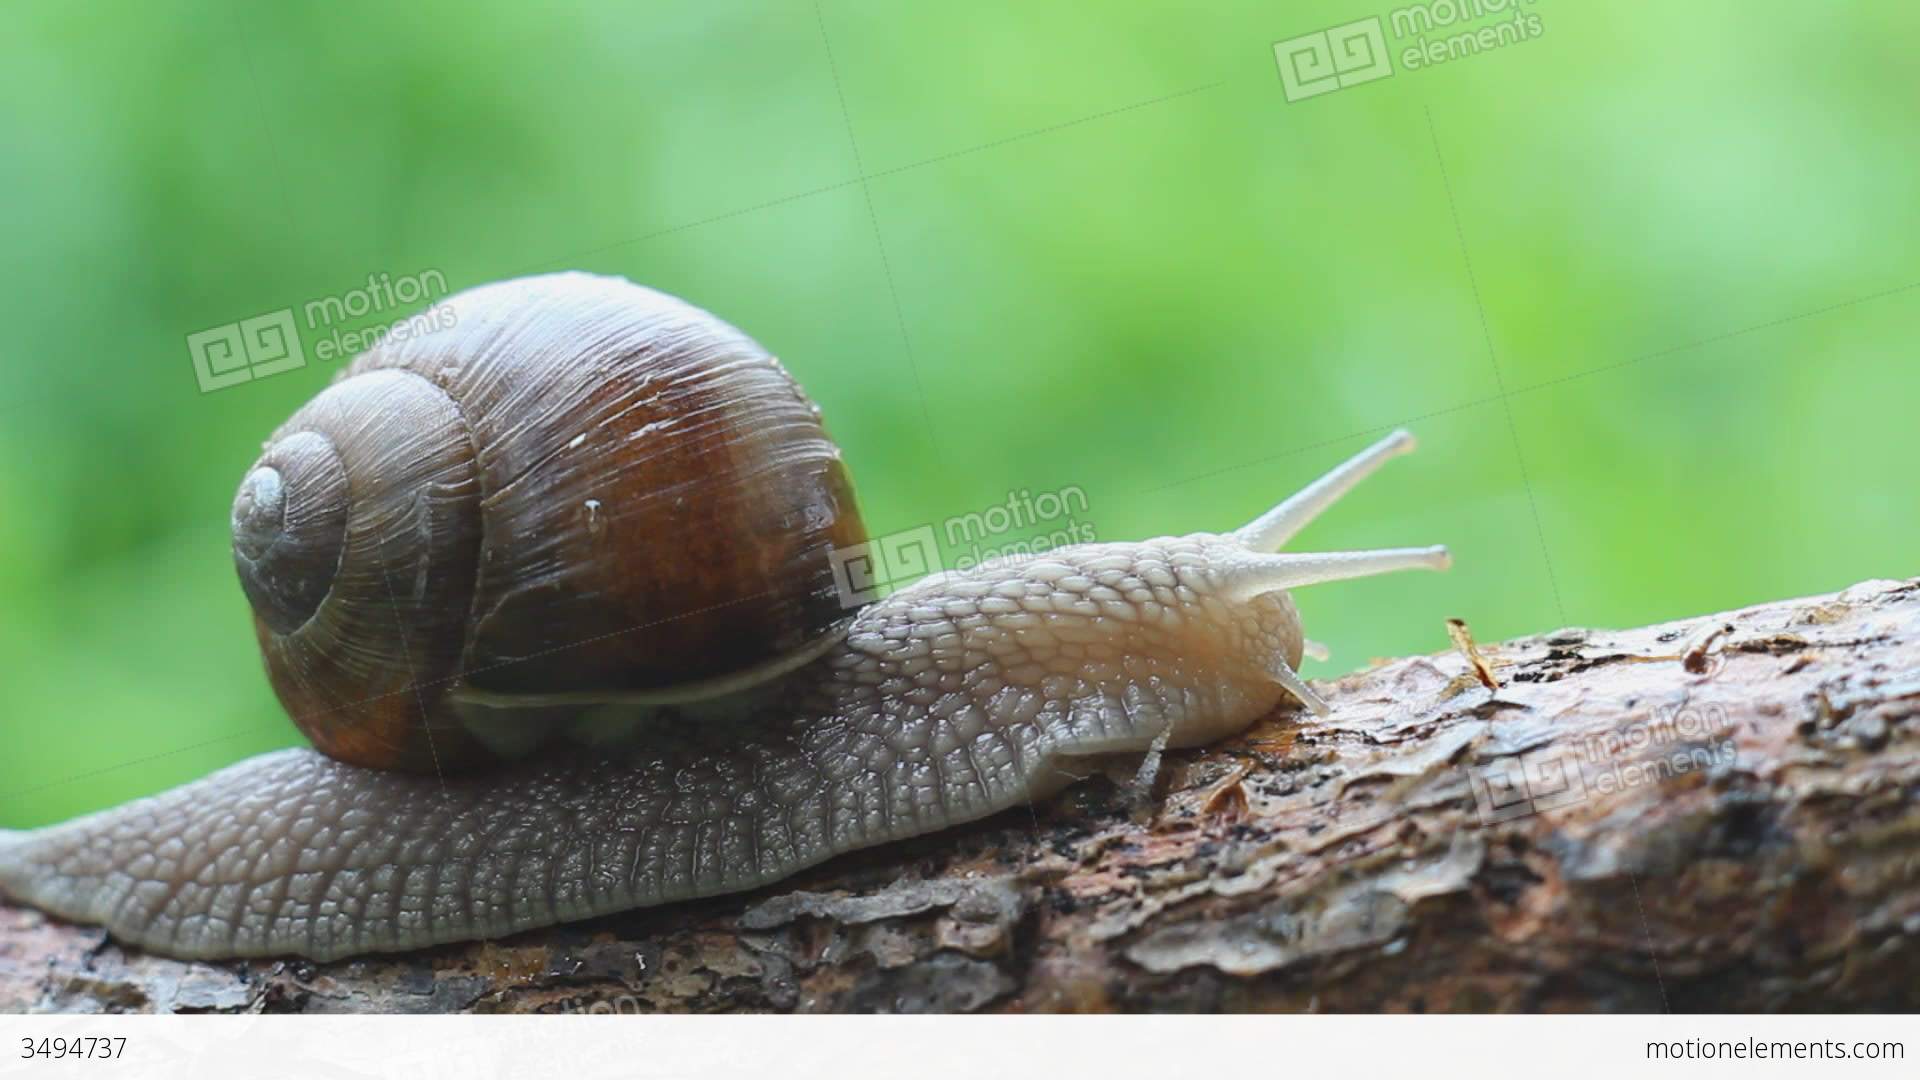 Crawling snail photo